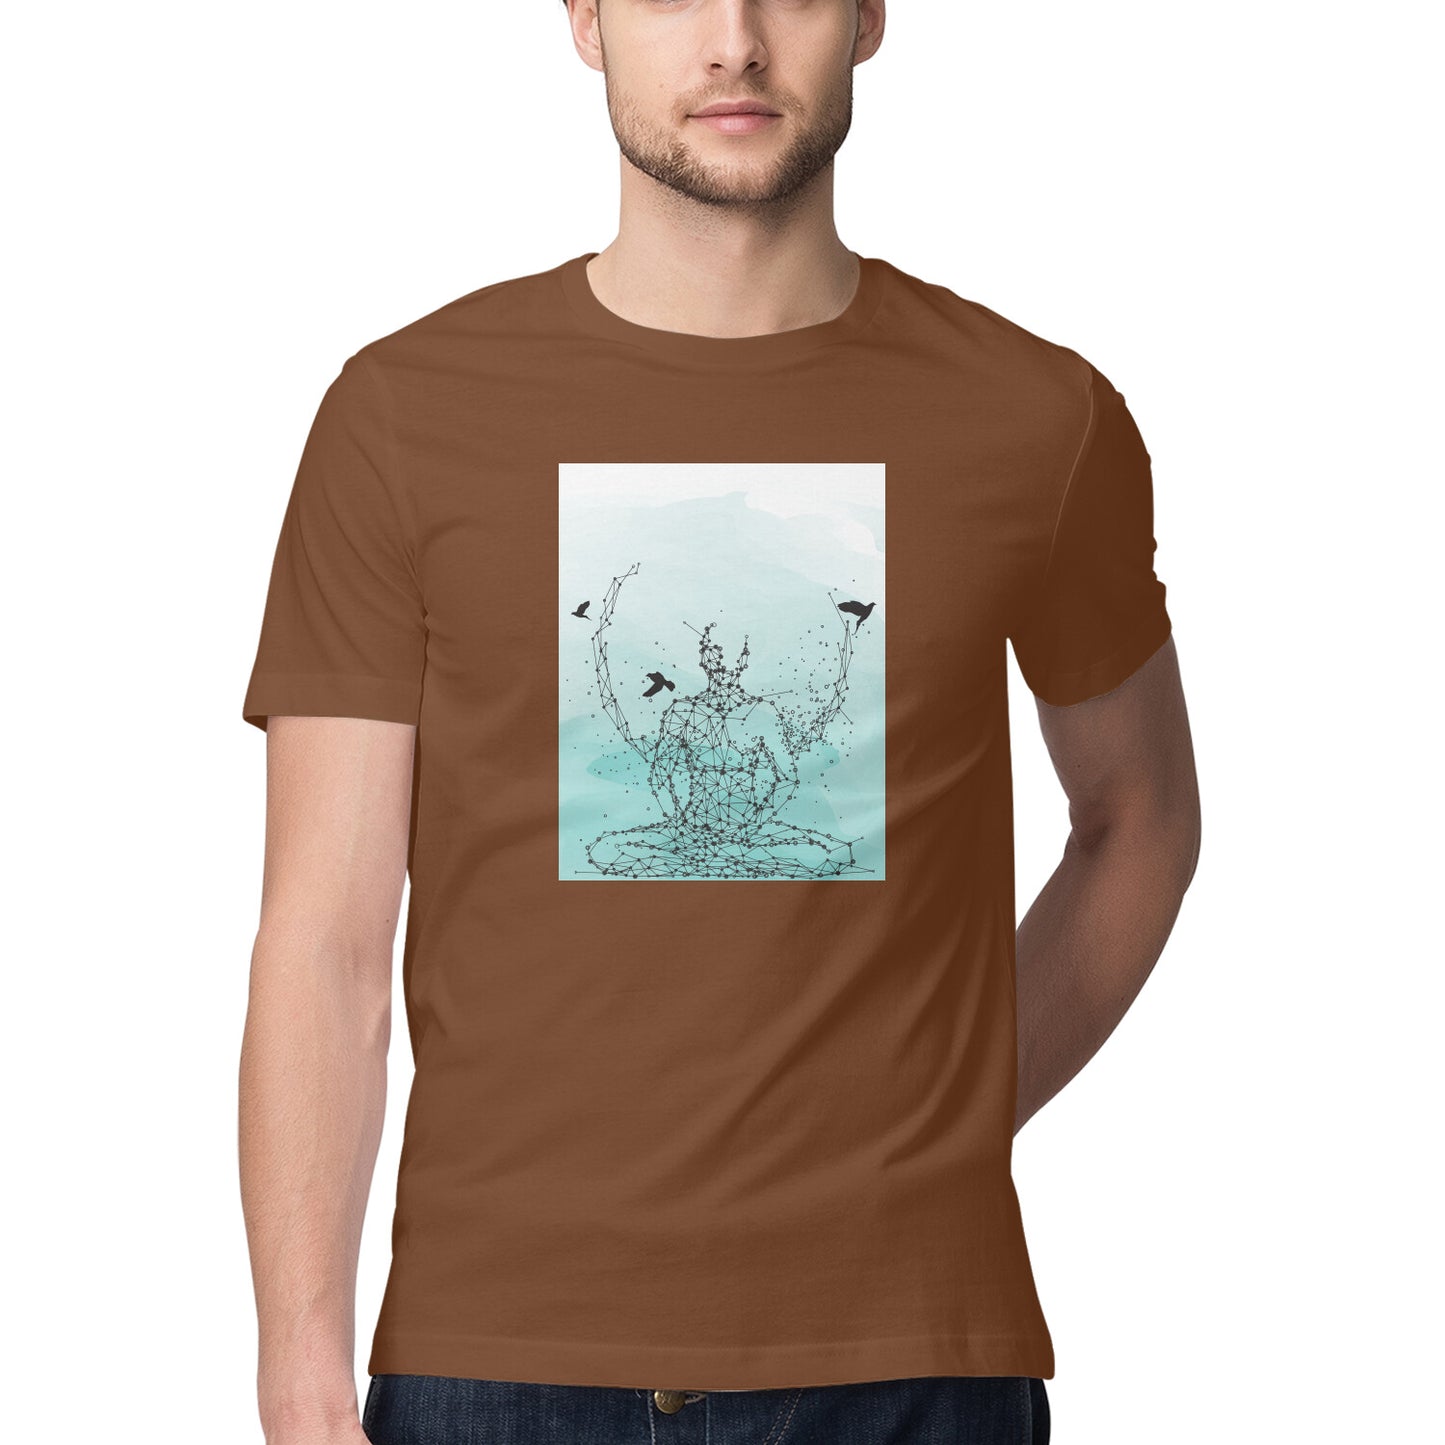 Yoga and Meditation 3 Printed Graphic T-Shirt